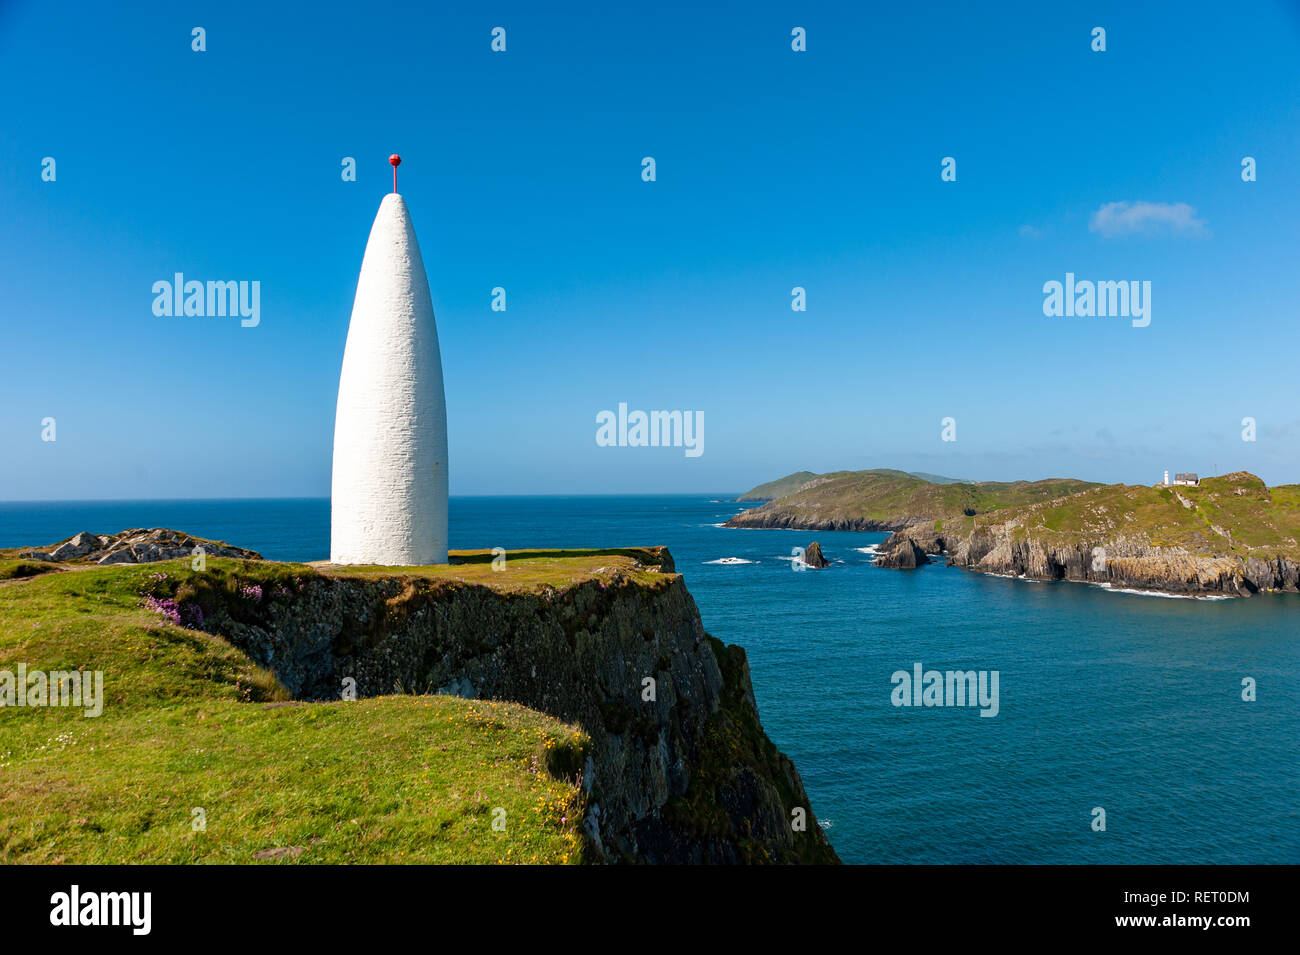 The Baltimore Beacon on the coast of County Cork, Ireland Stock Photo